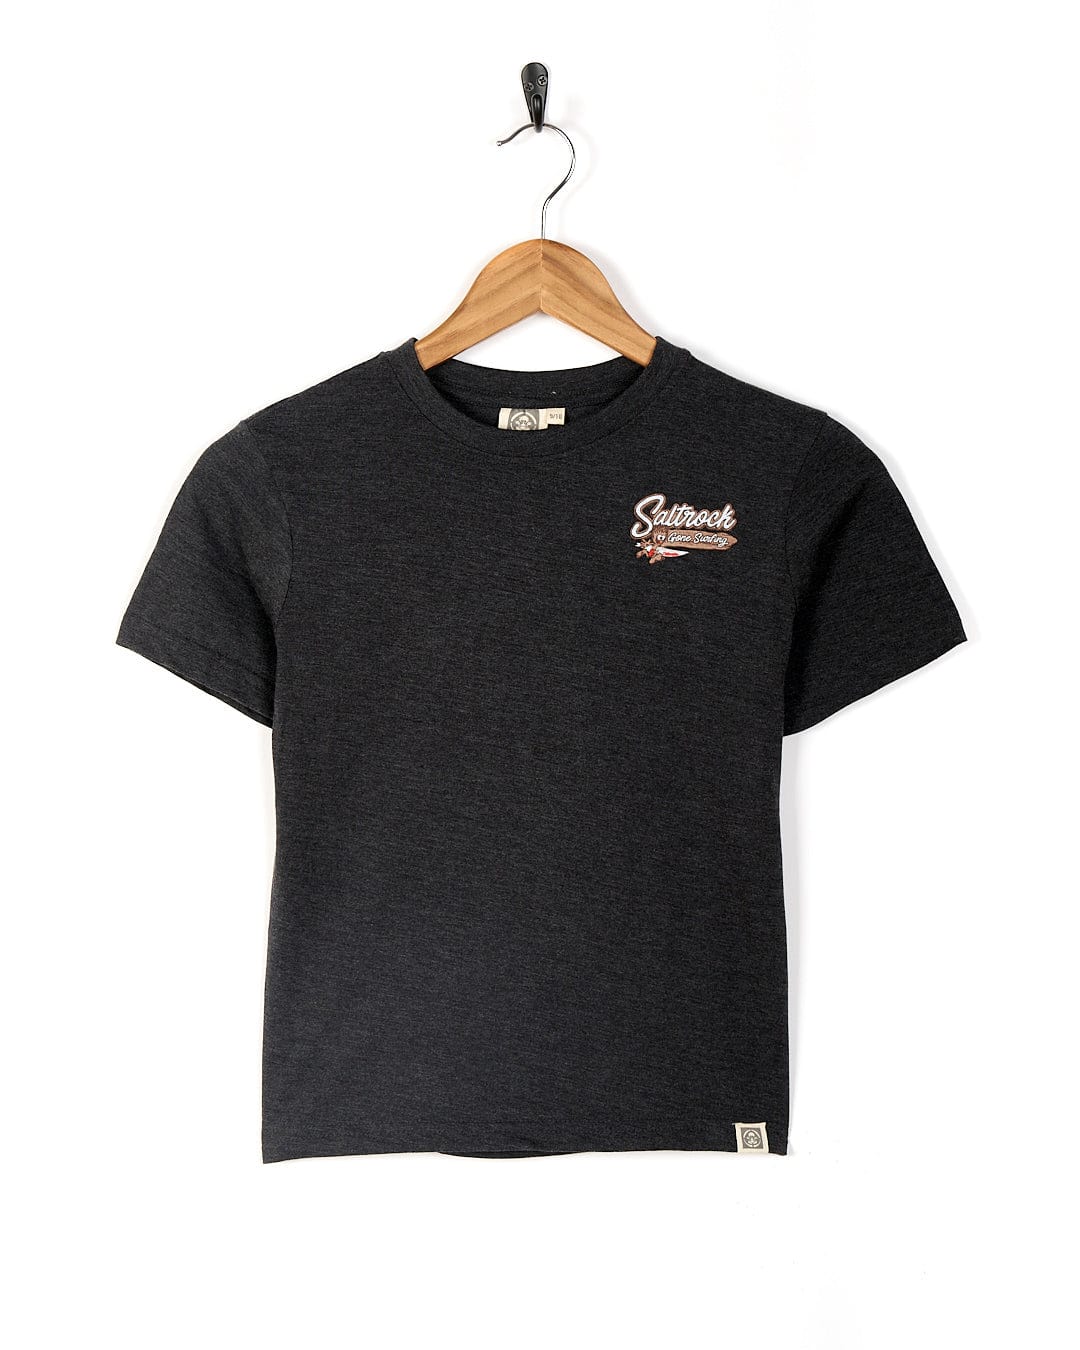 A Saltrock Cornwall-inspired black t-shirt perfect for beach lovers, featuring a subtle Beach Signs Cornwall - Kids Short Sleeve T-Shirt - Dark Grey logo.